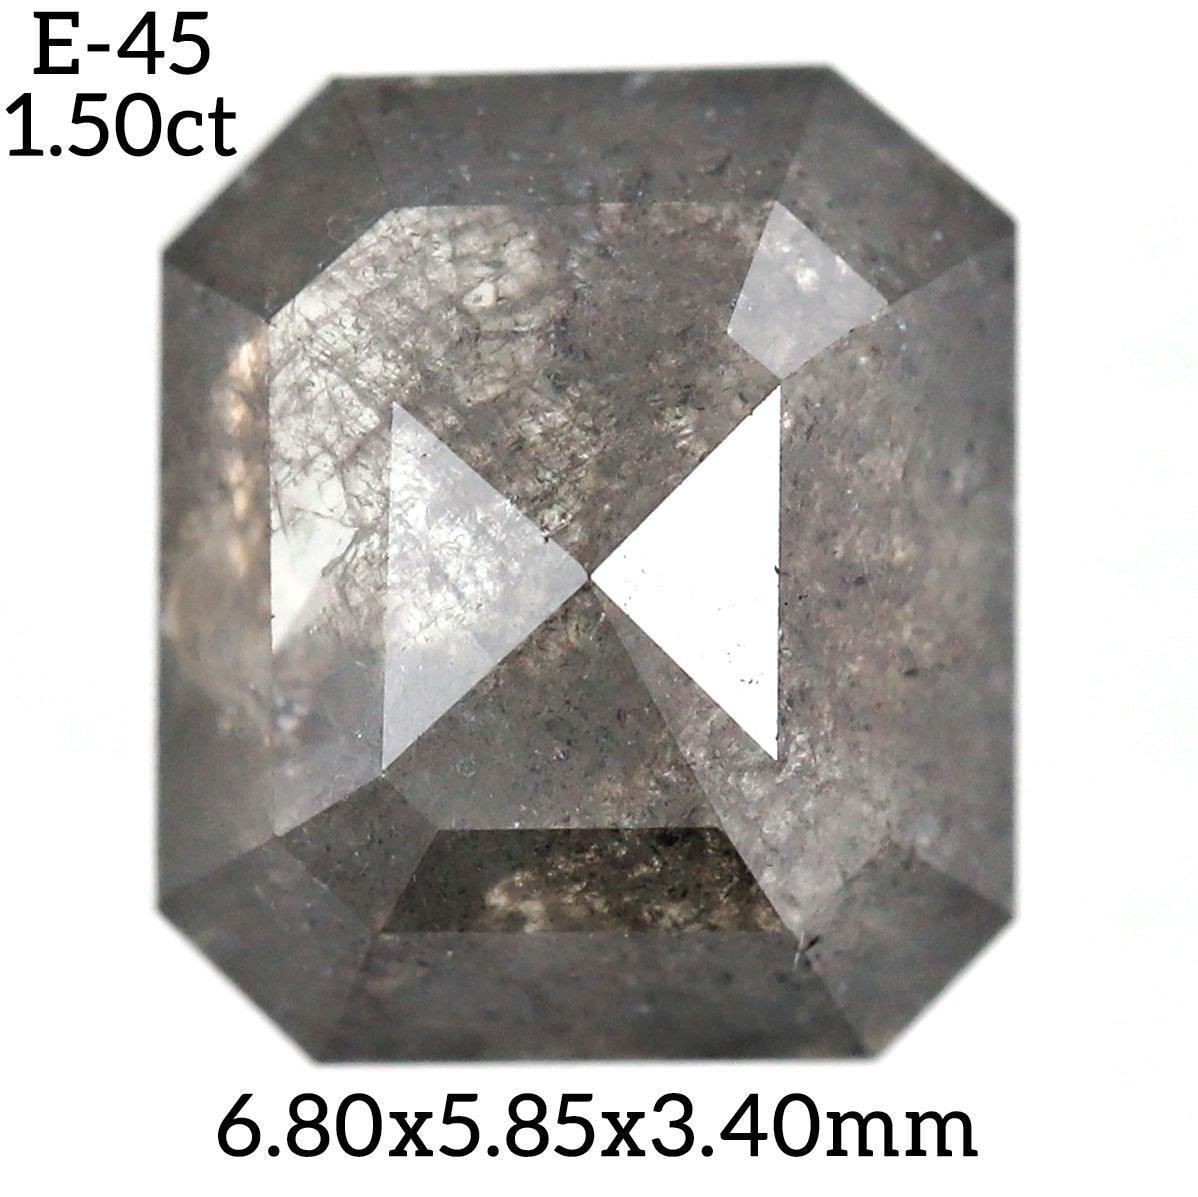 E45 - Salt and pepper emerald diamond - Rubysta